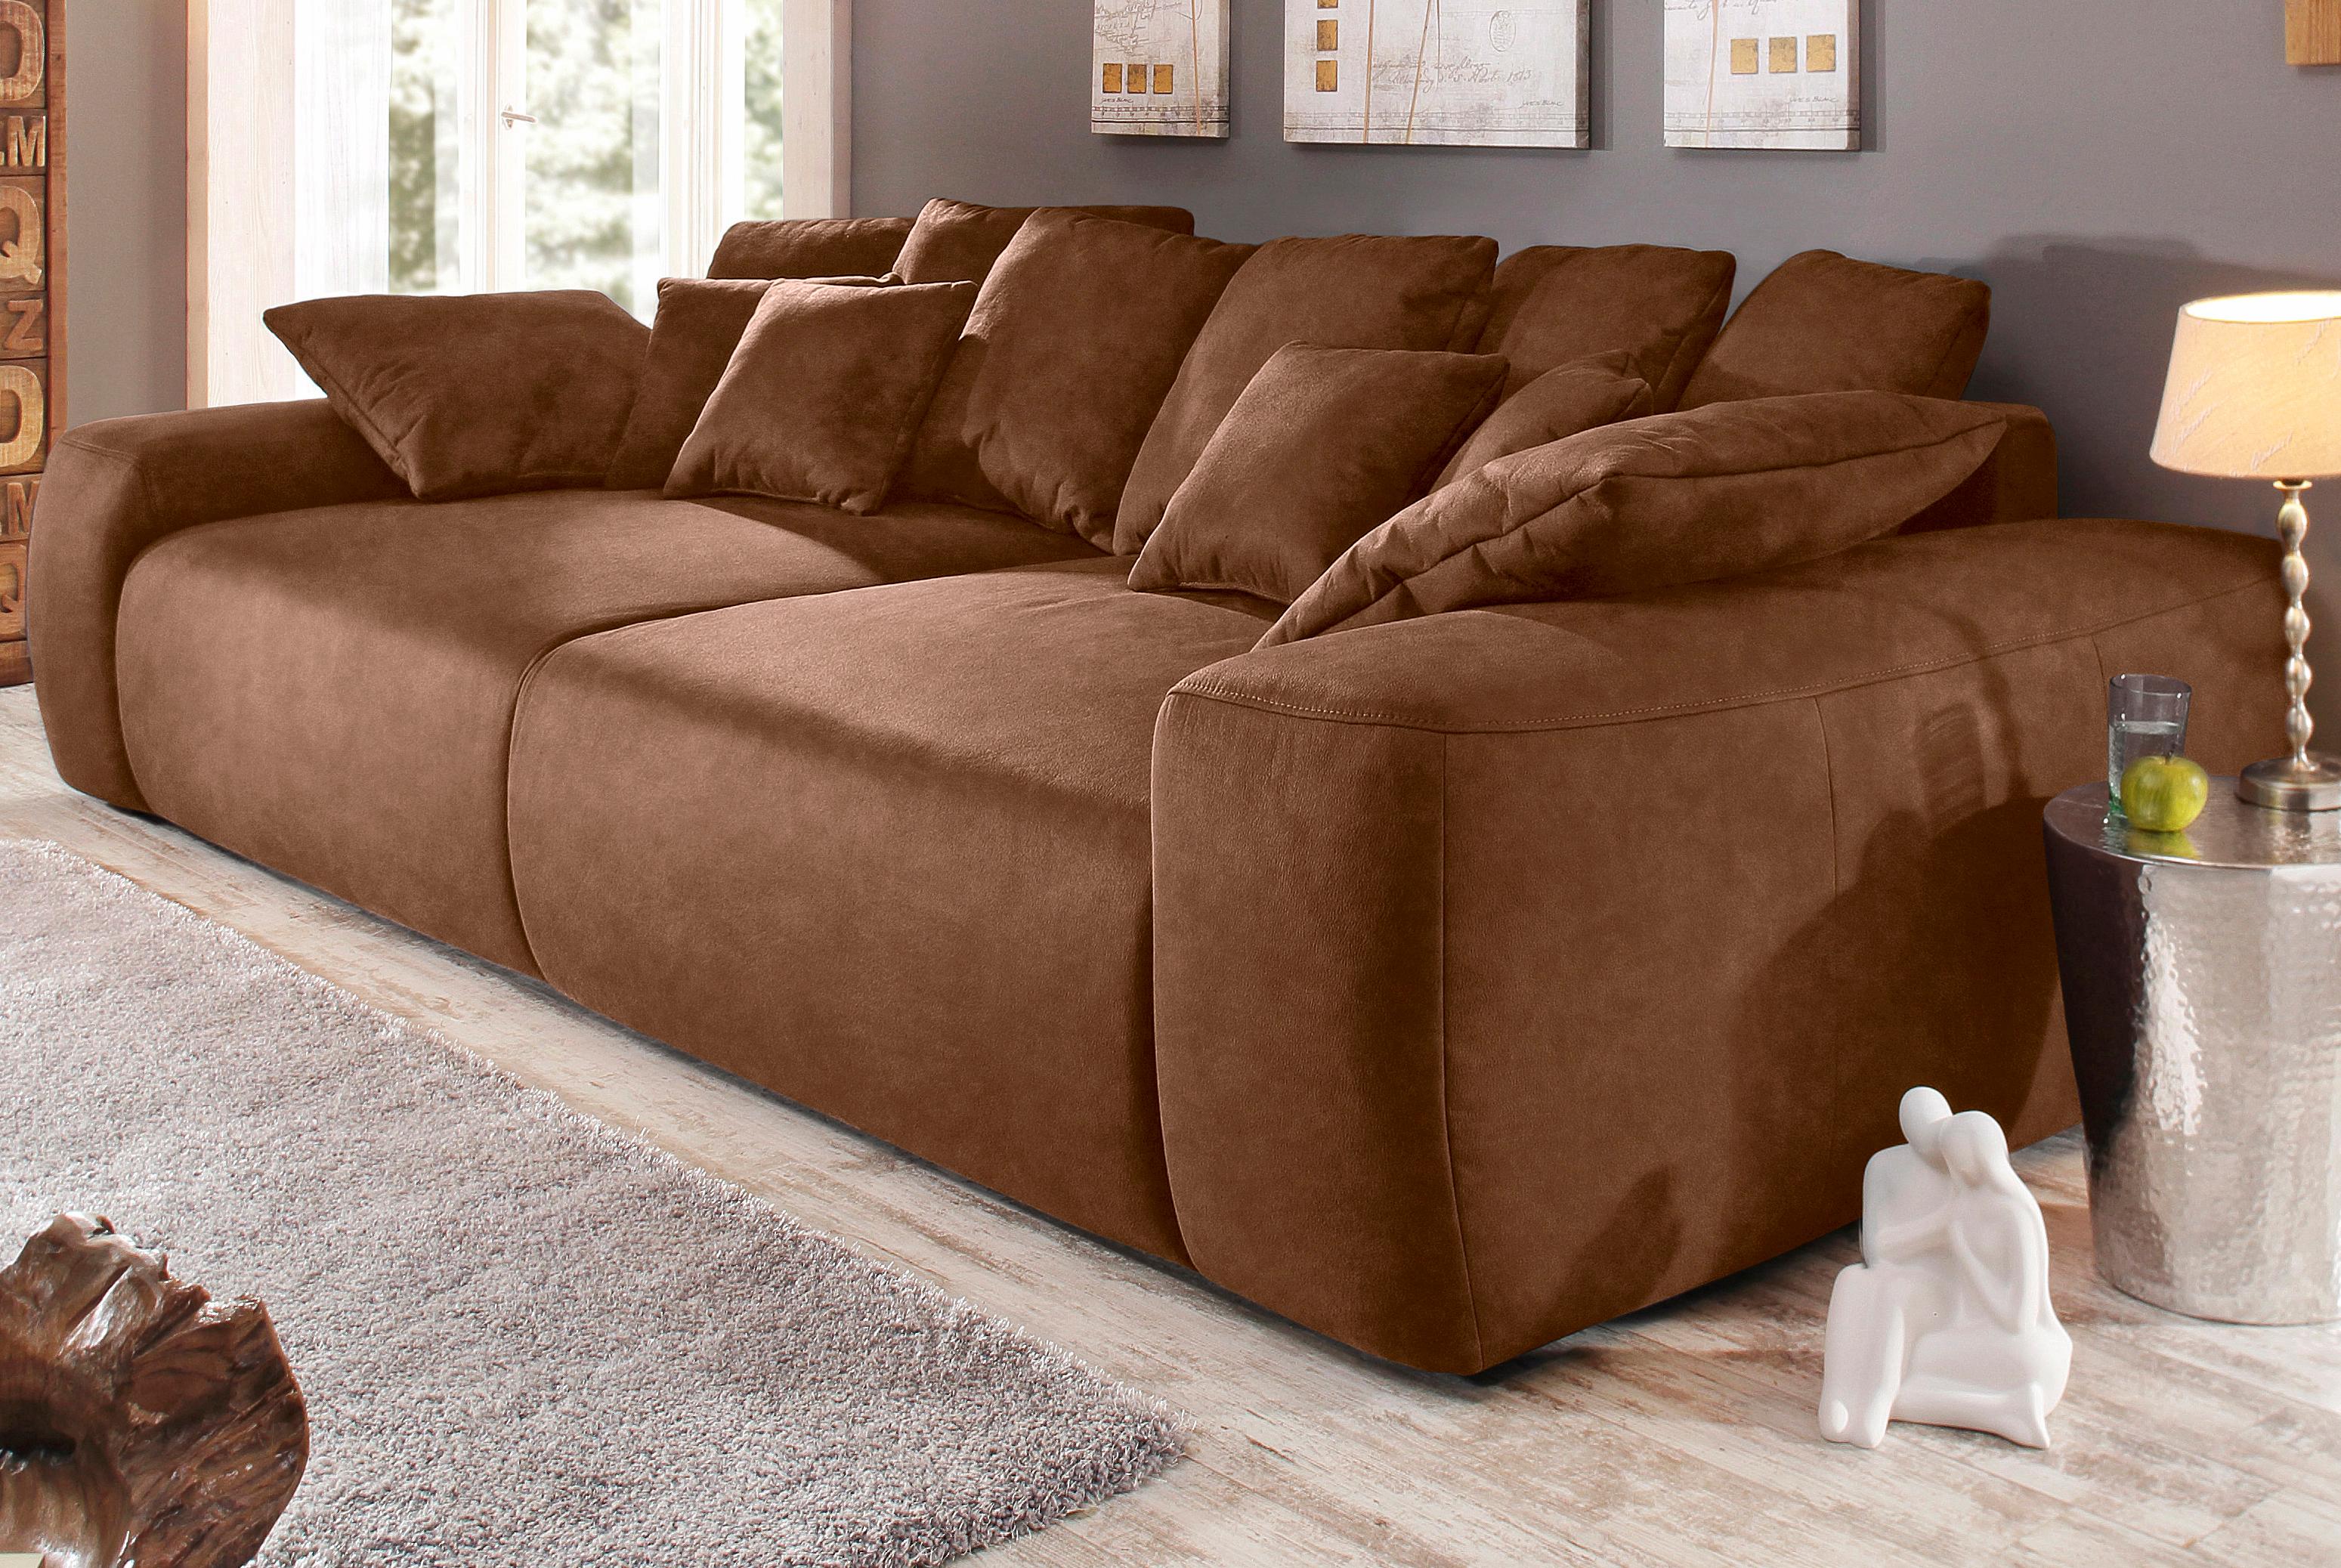 Home affaire Big-Sofa, Breite 302 cm, Lounge Sofa mit vielen losen Kissen